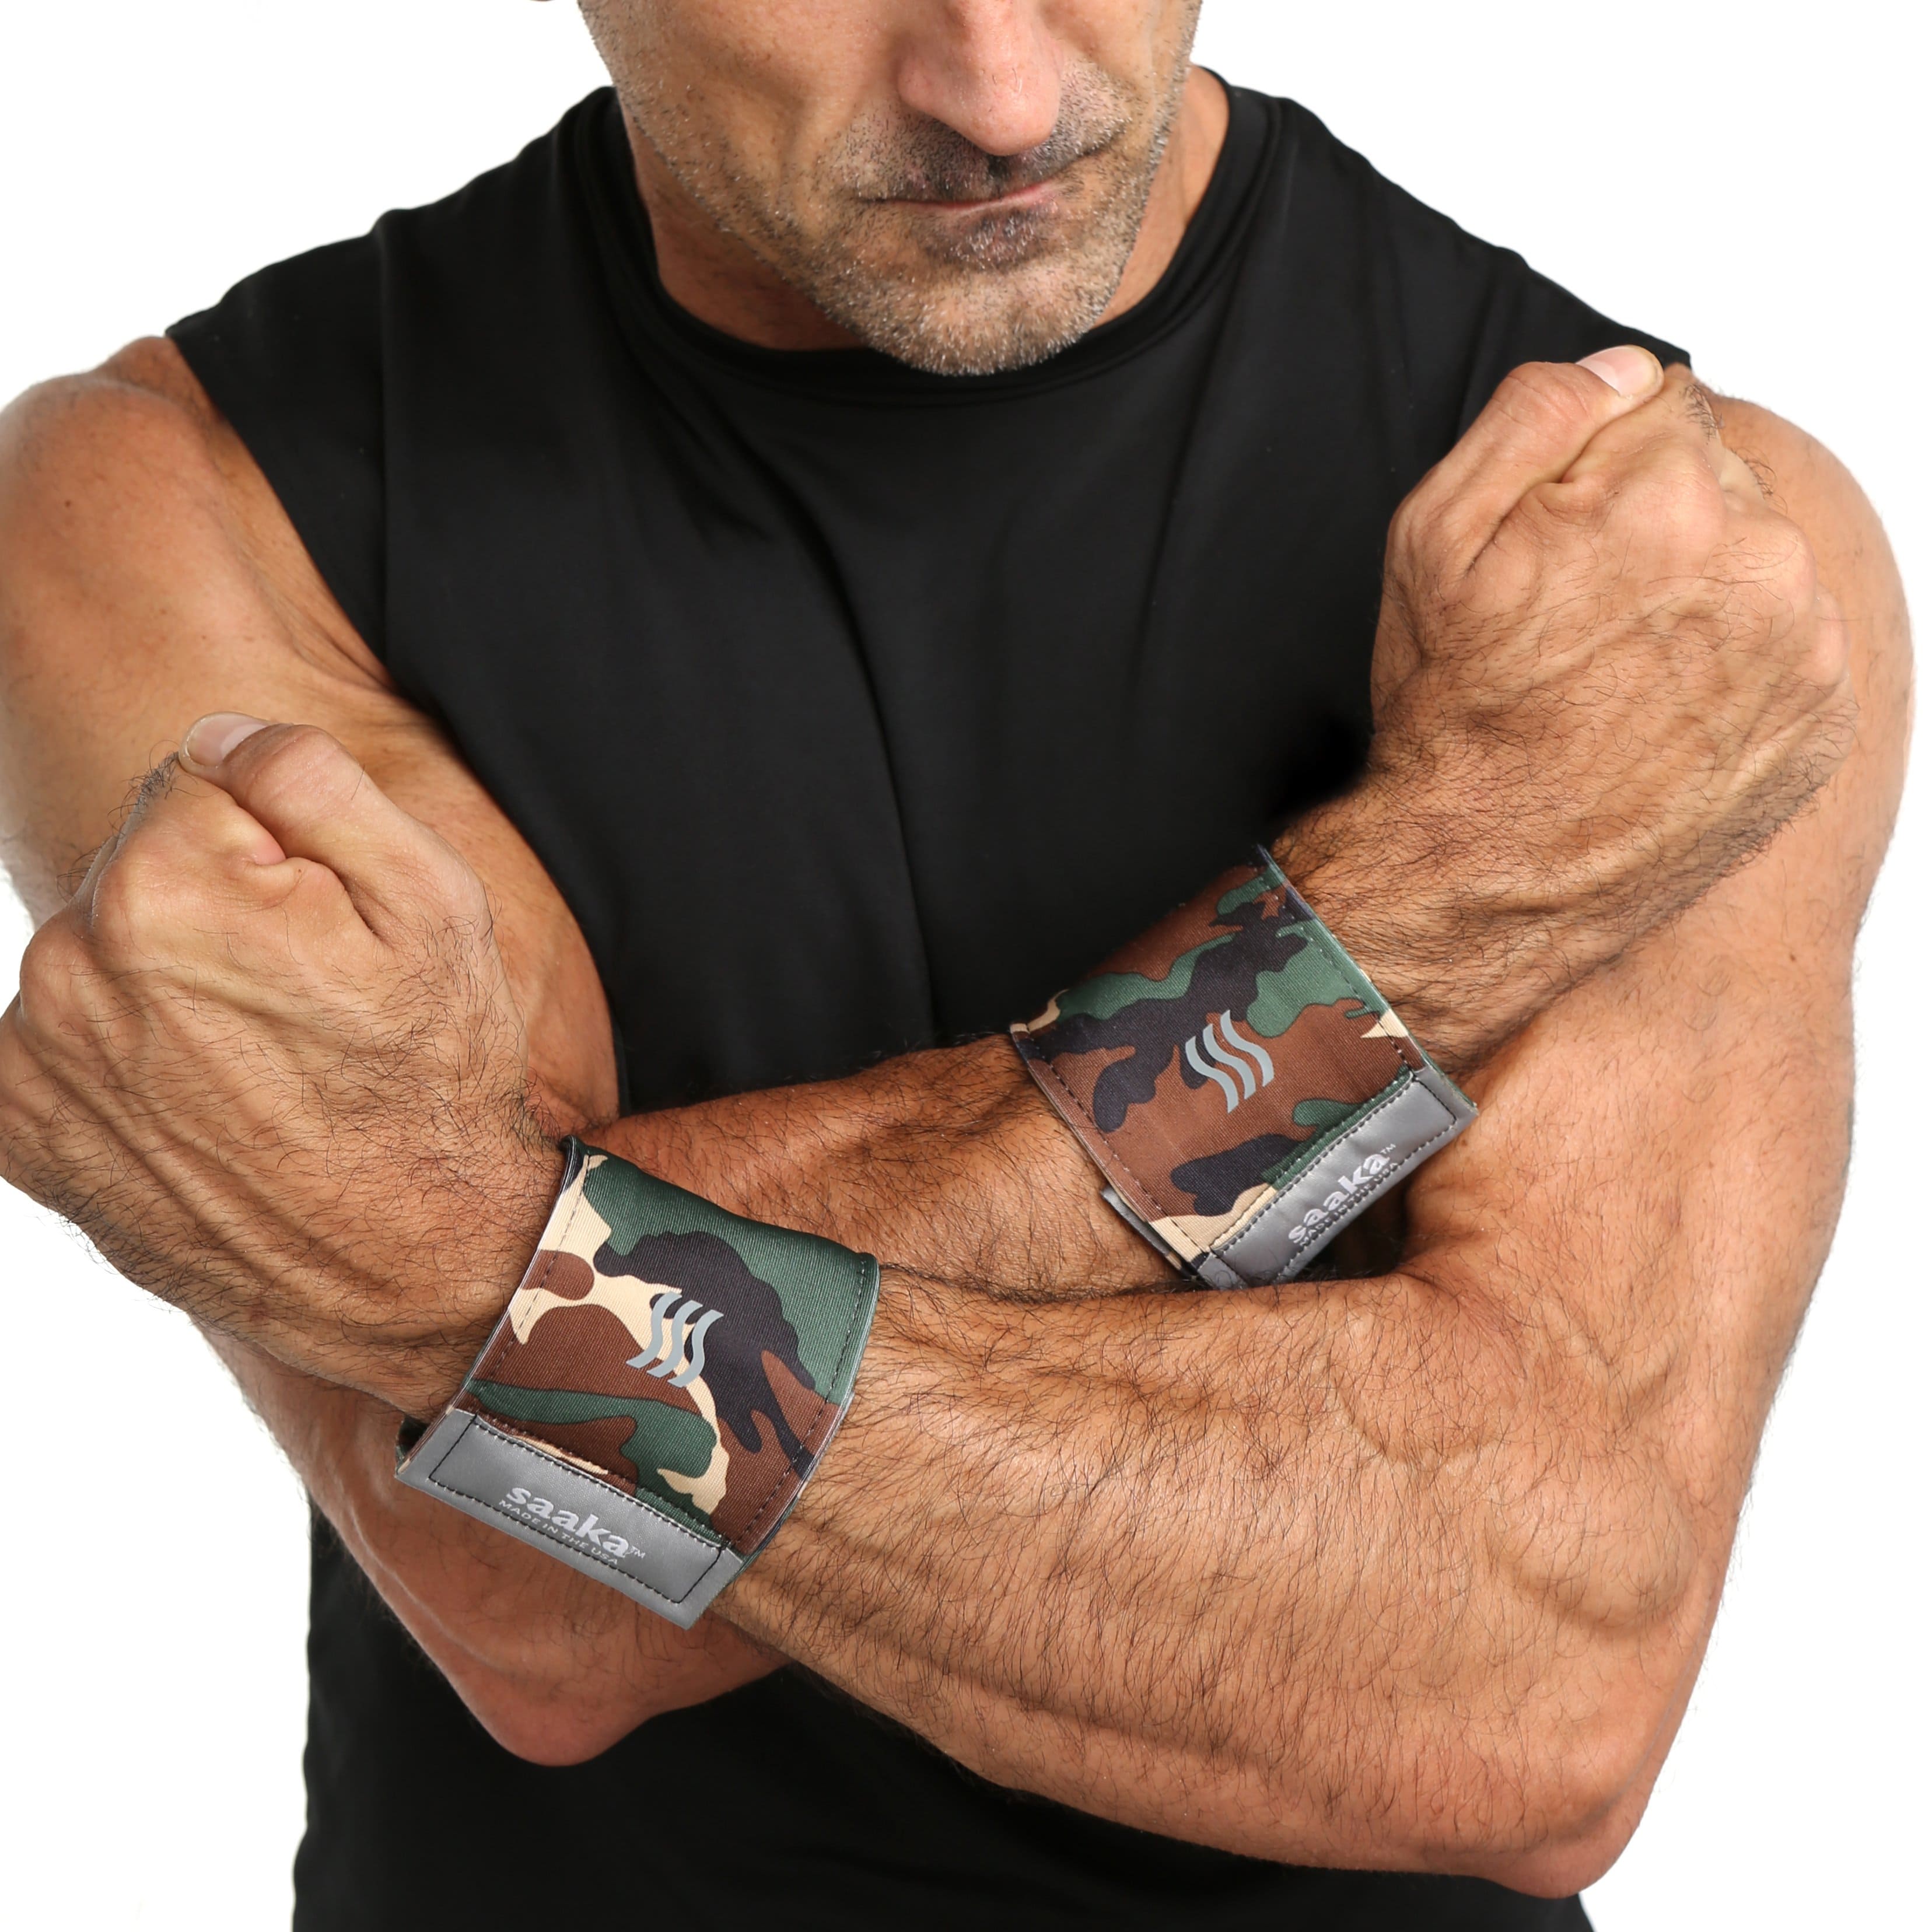 Man wearing camo sweatband wristbands.